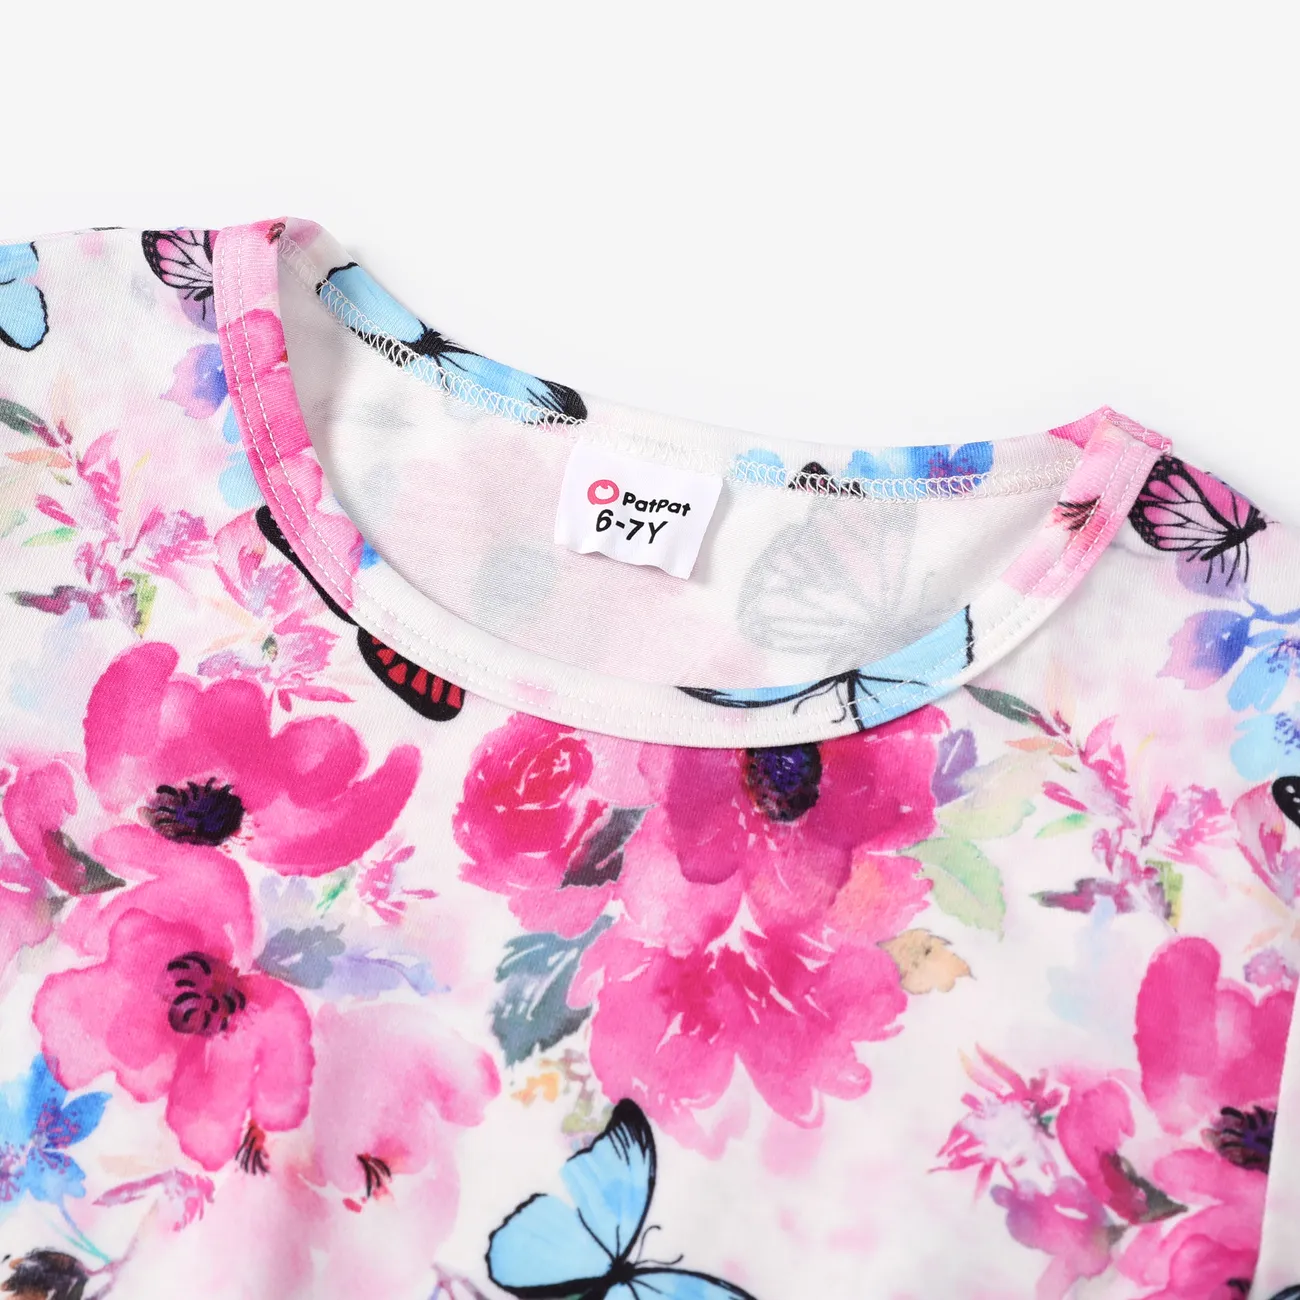 Kid Girl 2pcs Cooling Denim Floral Print Top and Jeans Set Roseo big image 1